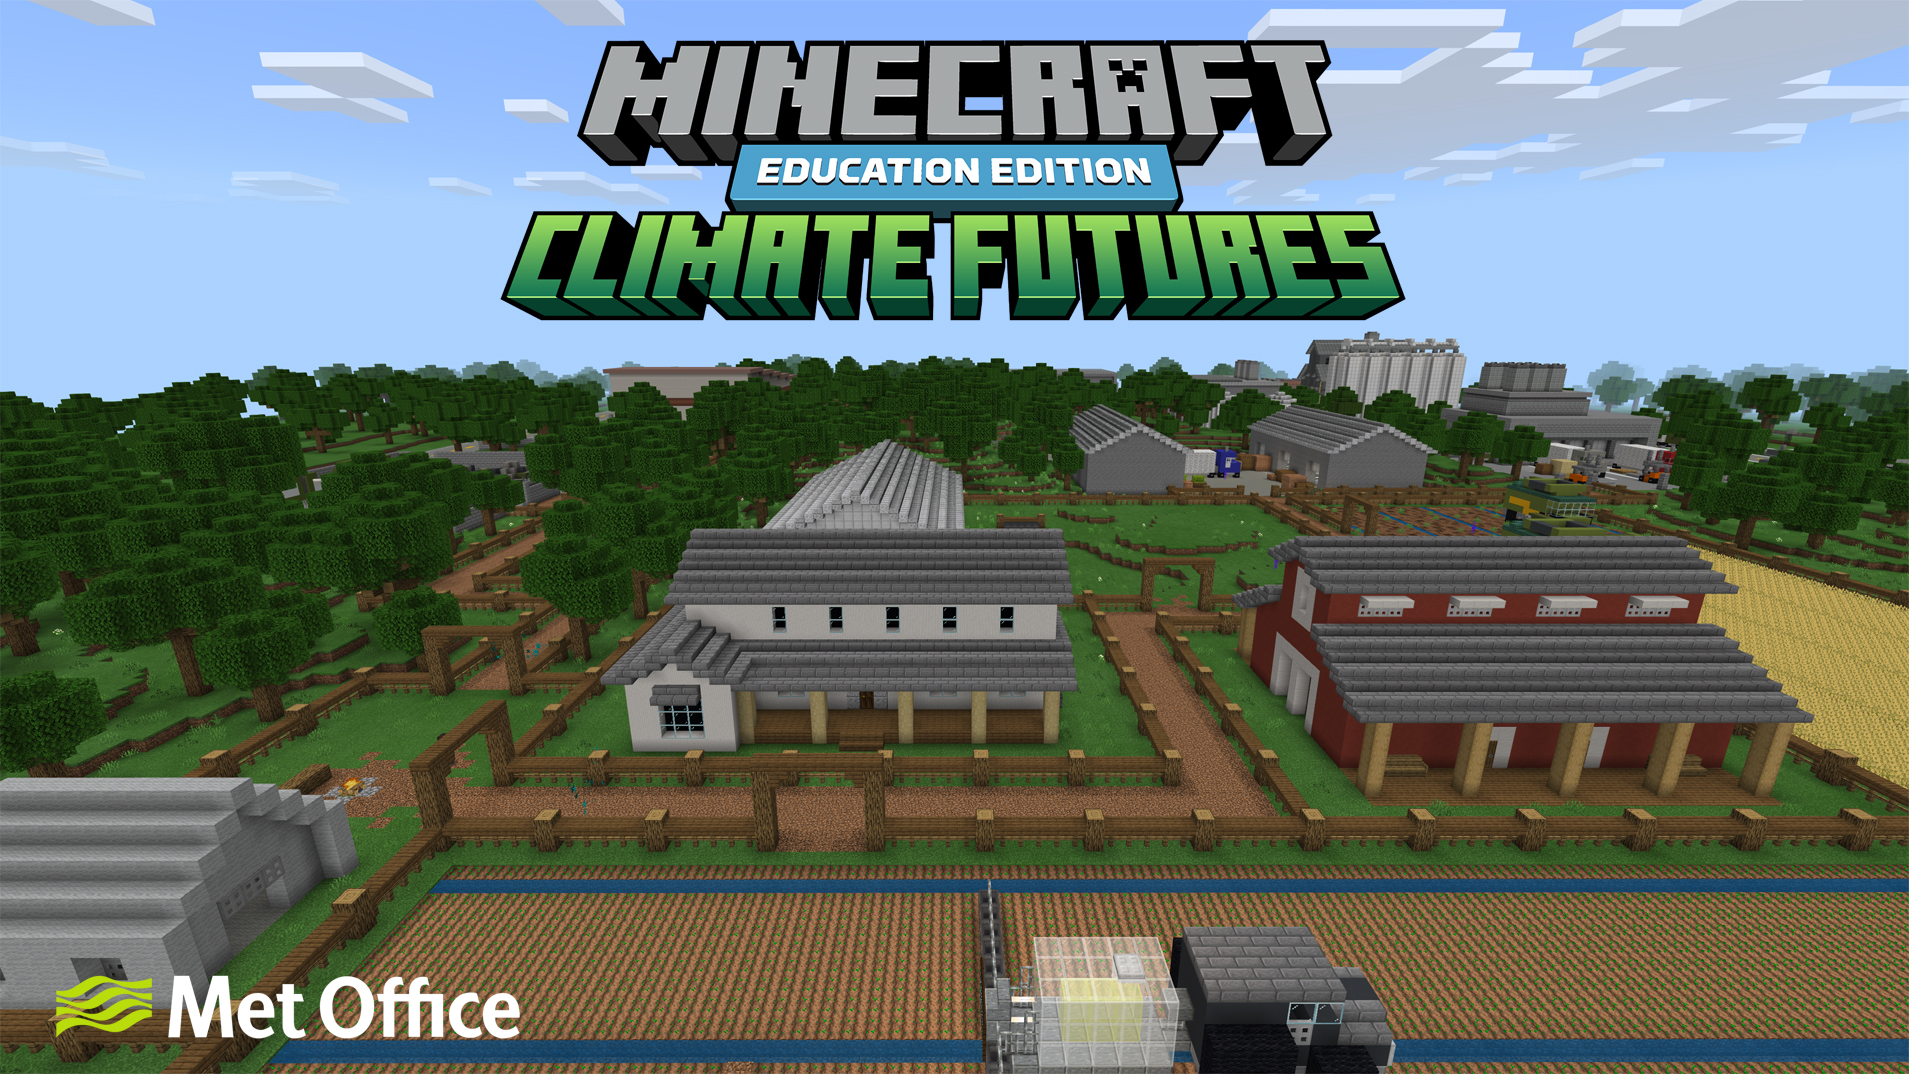 Homepage edition minecraft education Download Minecraft: